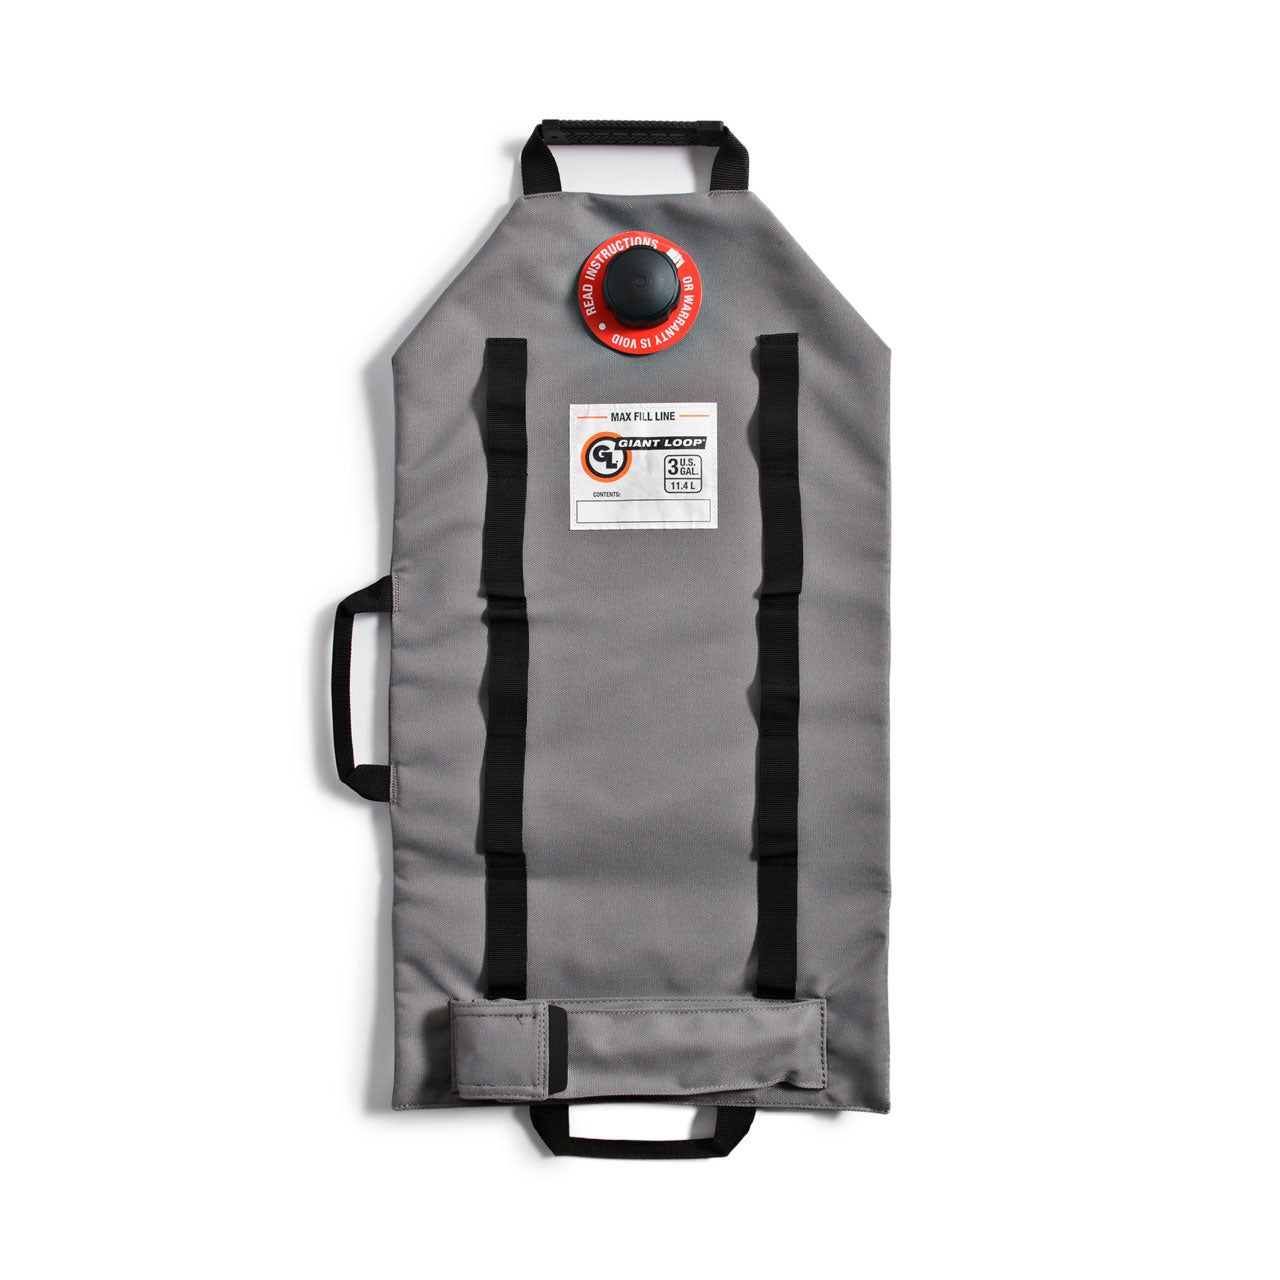 Giant Loop Fuel-Safe Bags